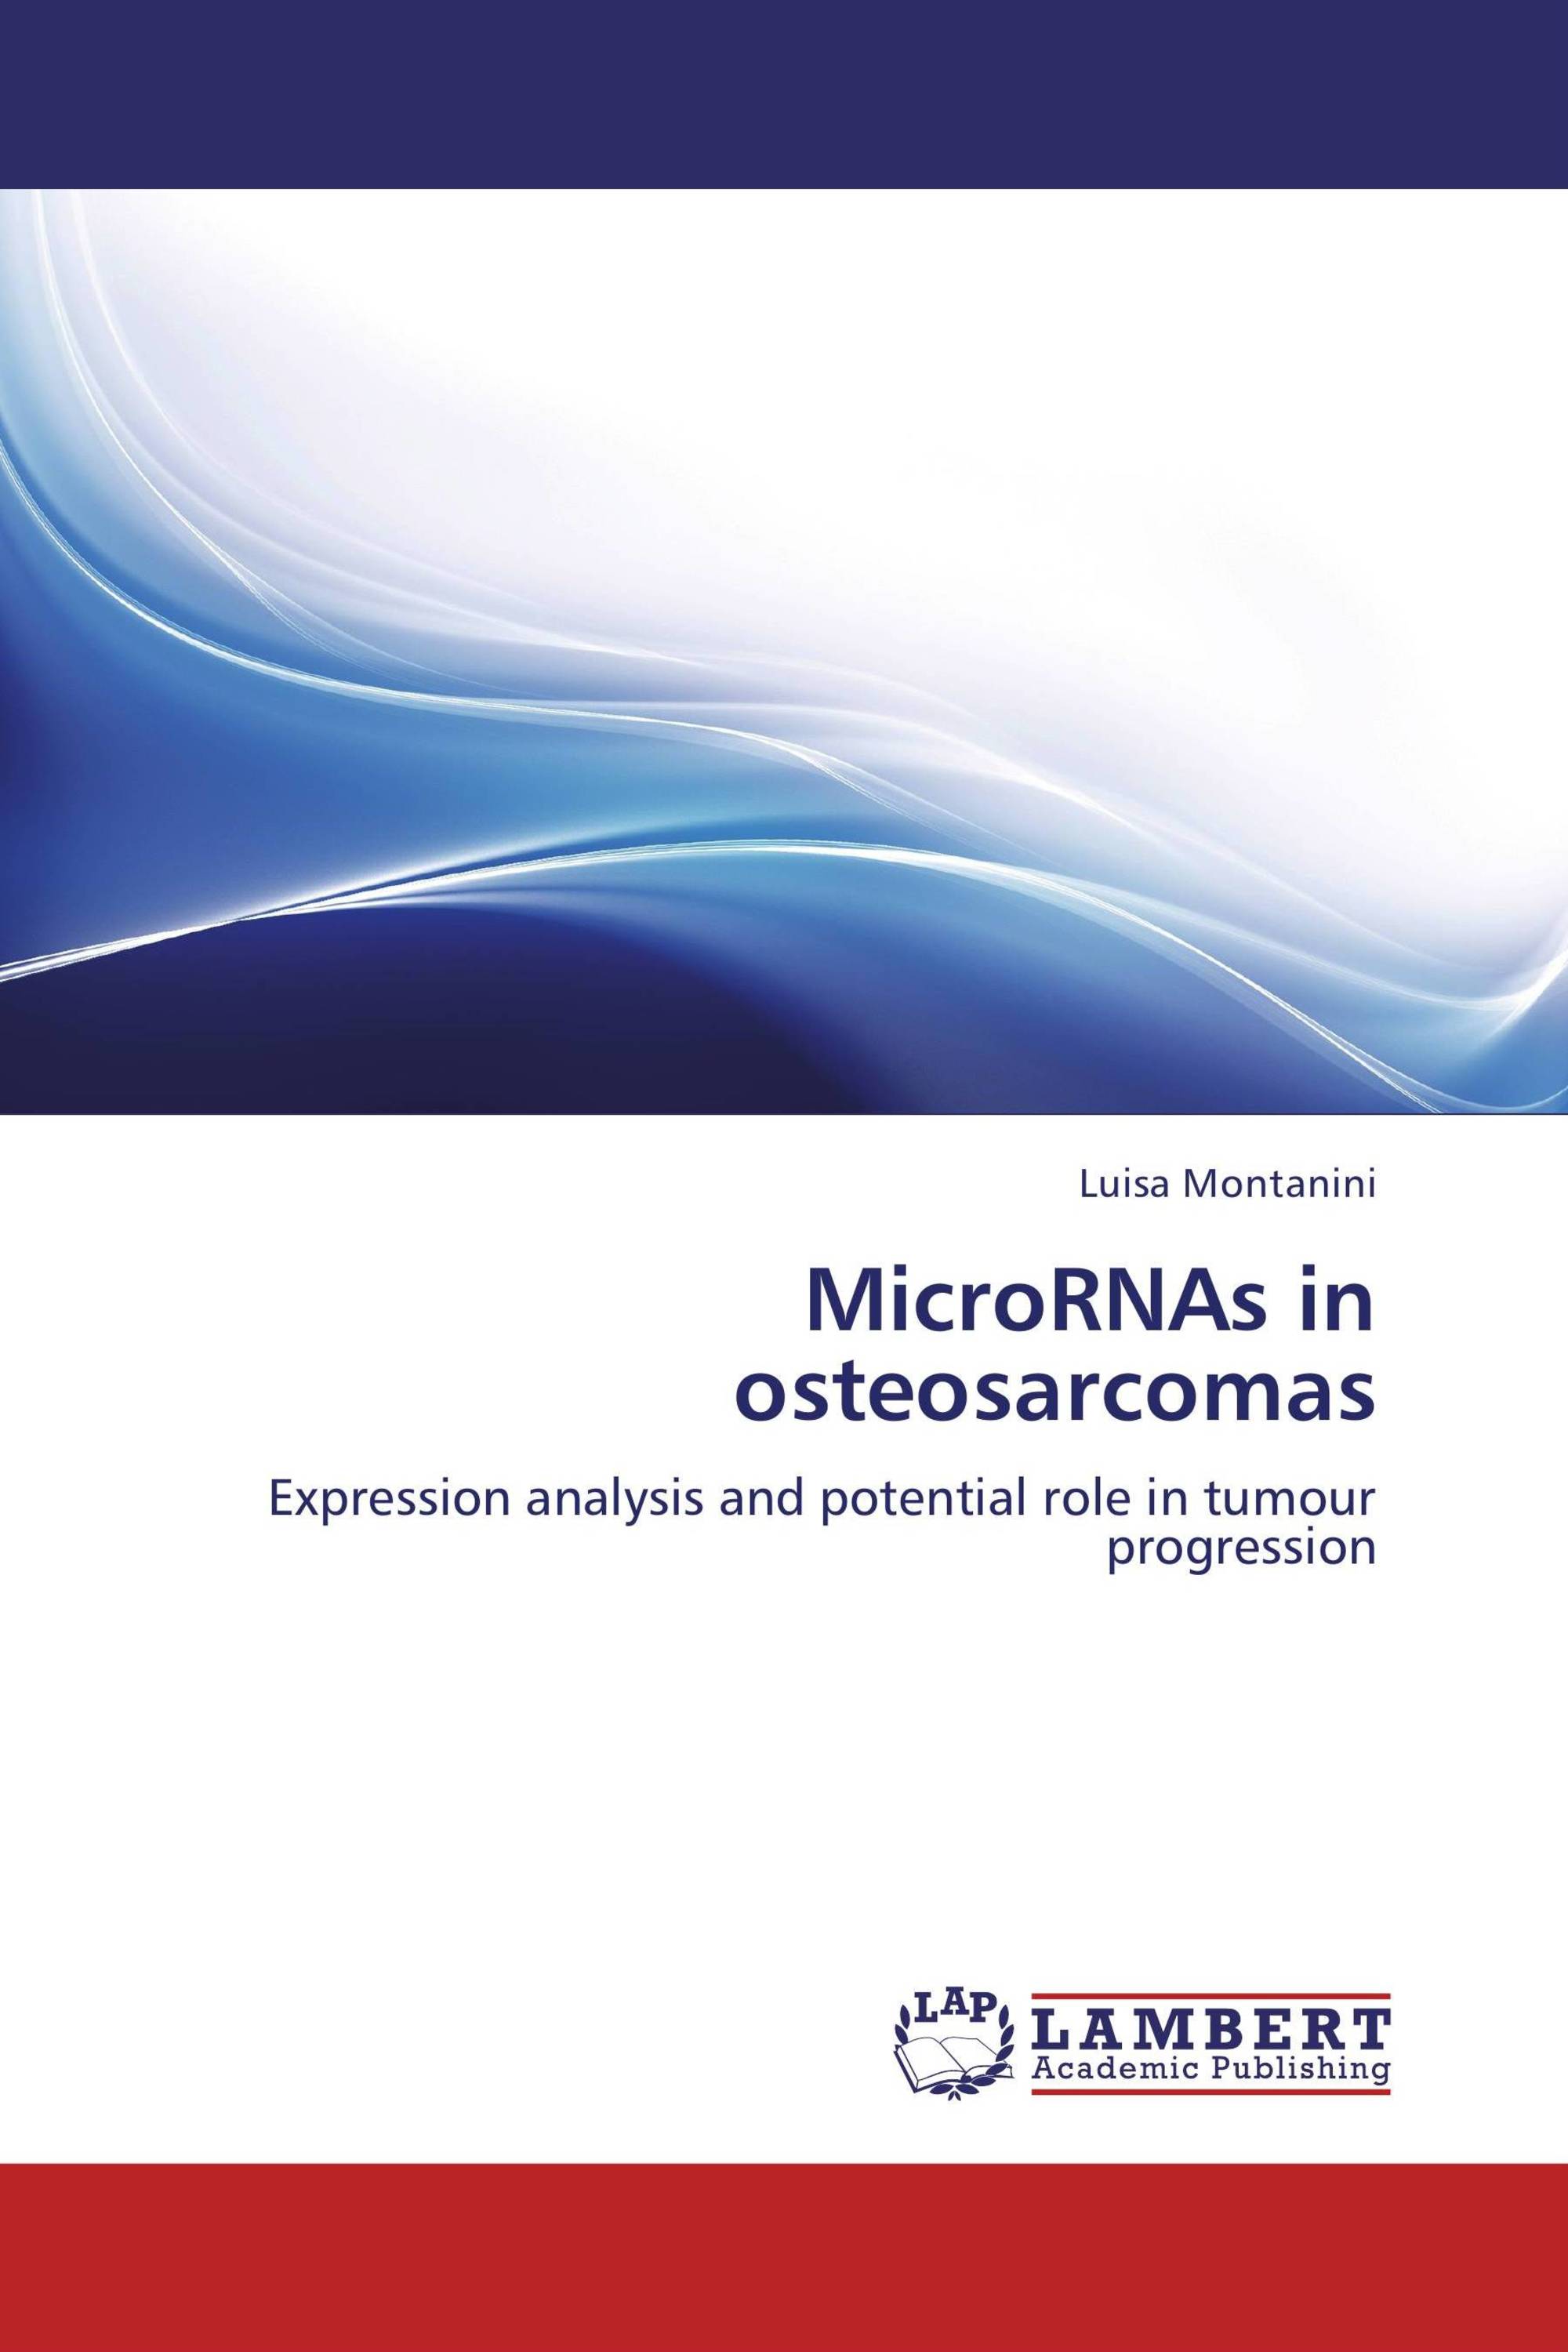 MicroRNAs in osteosarcomas